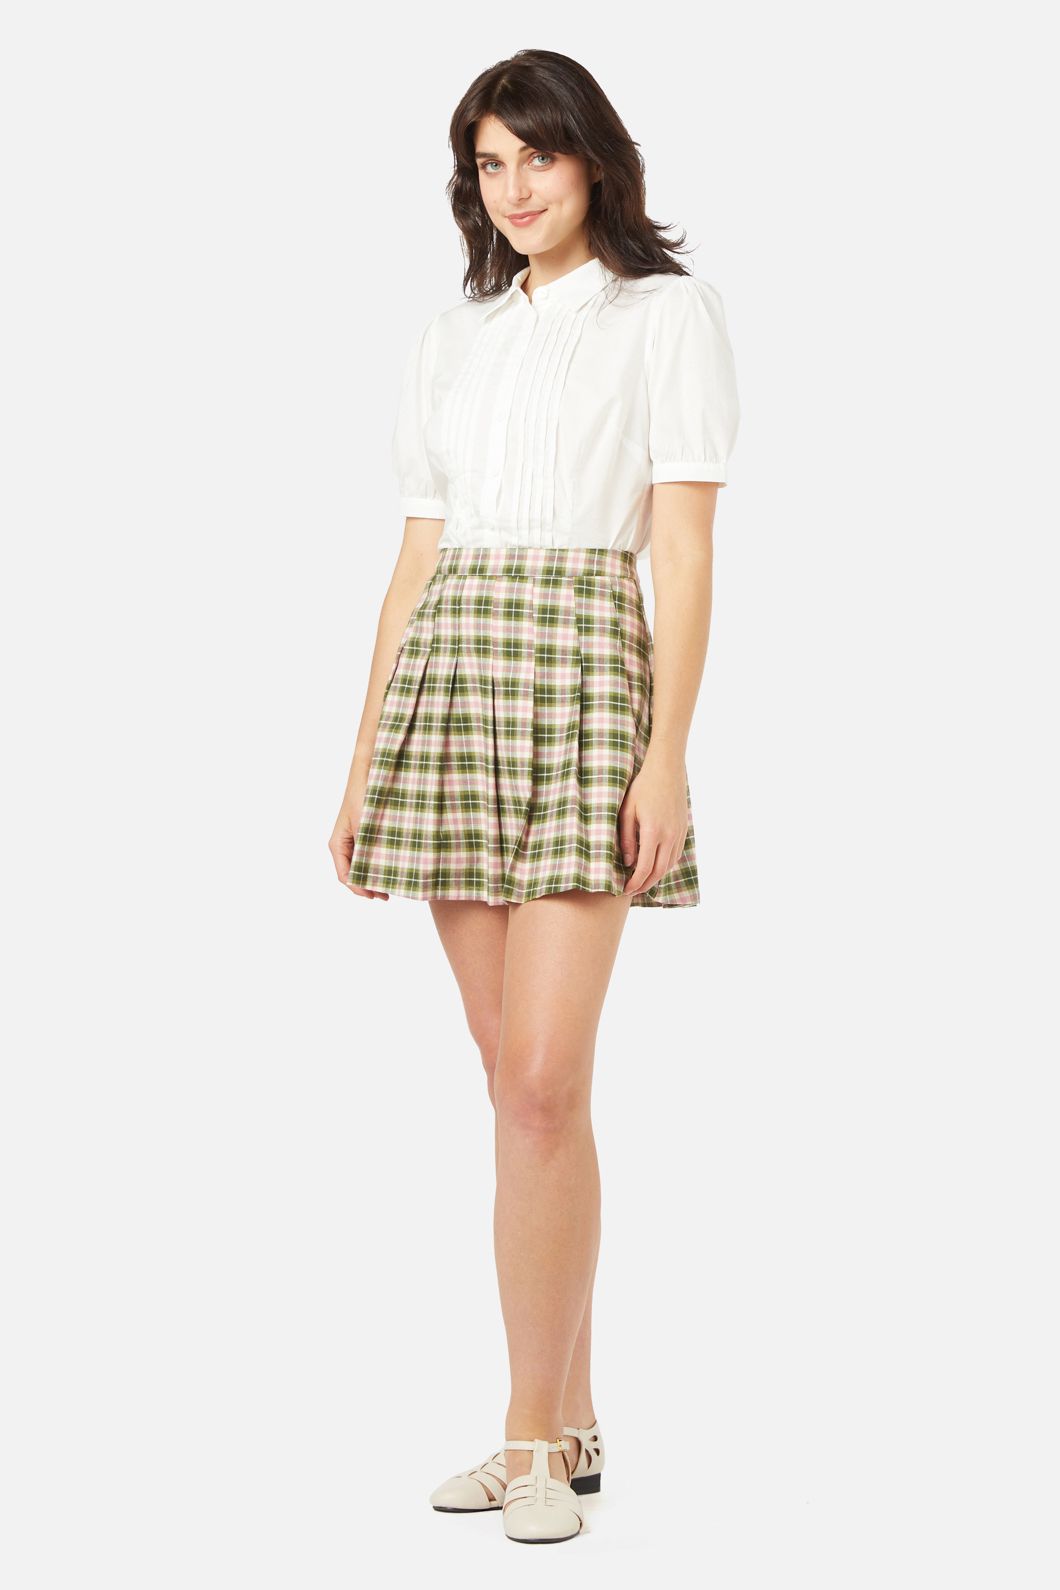 Green/White Check Skirt - Lowes Menswear